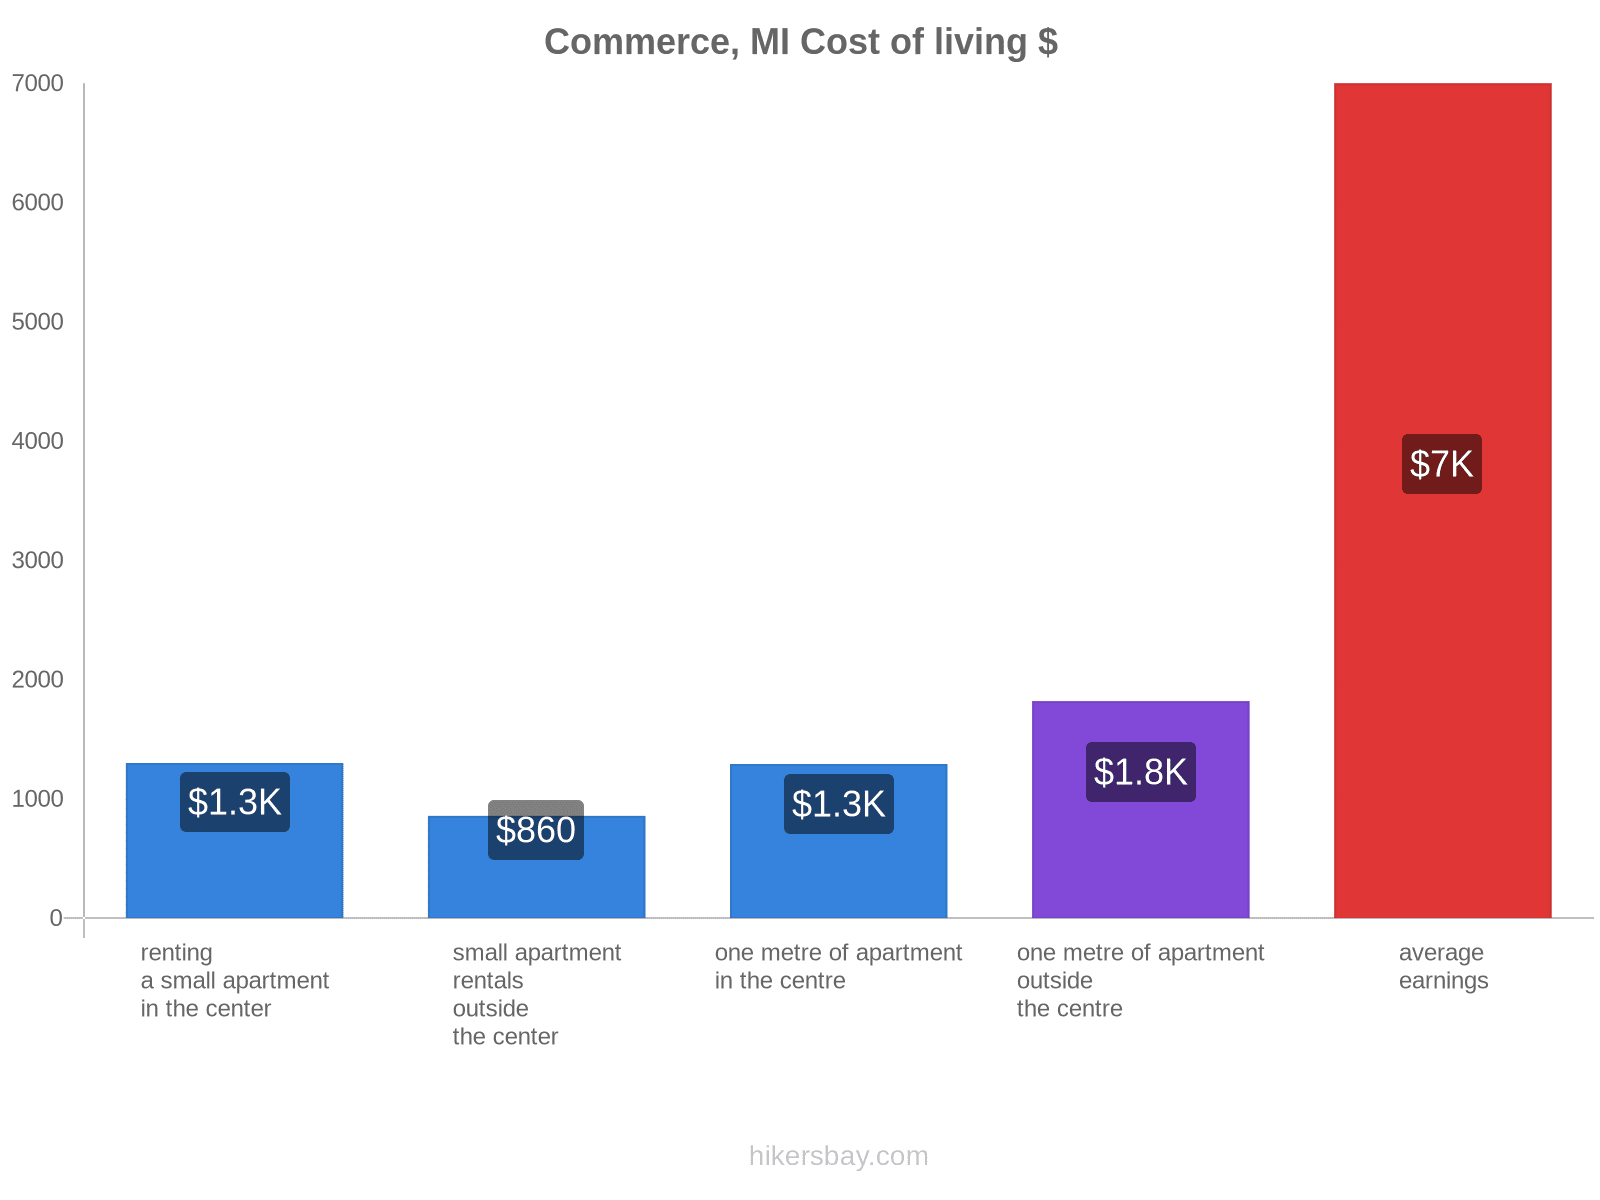 Commerce, MI cost of living hikersbay.com